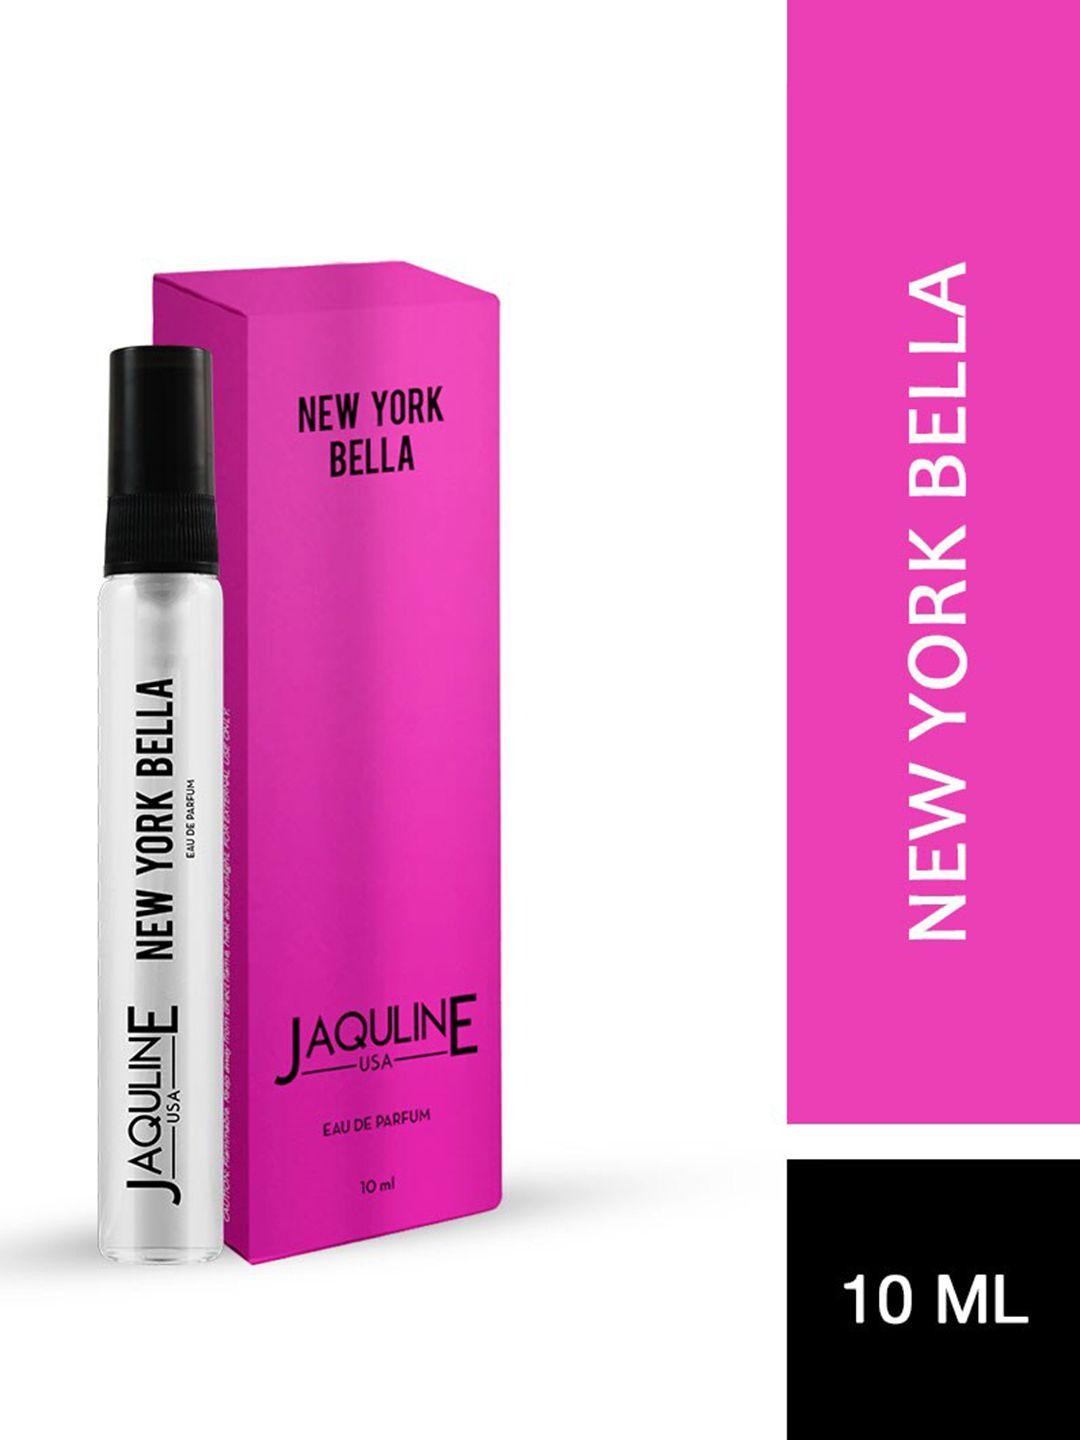 jaquline usa new york bella long lasting eau de parfum - 10 ml